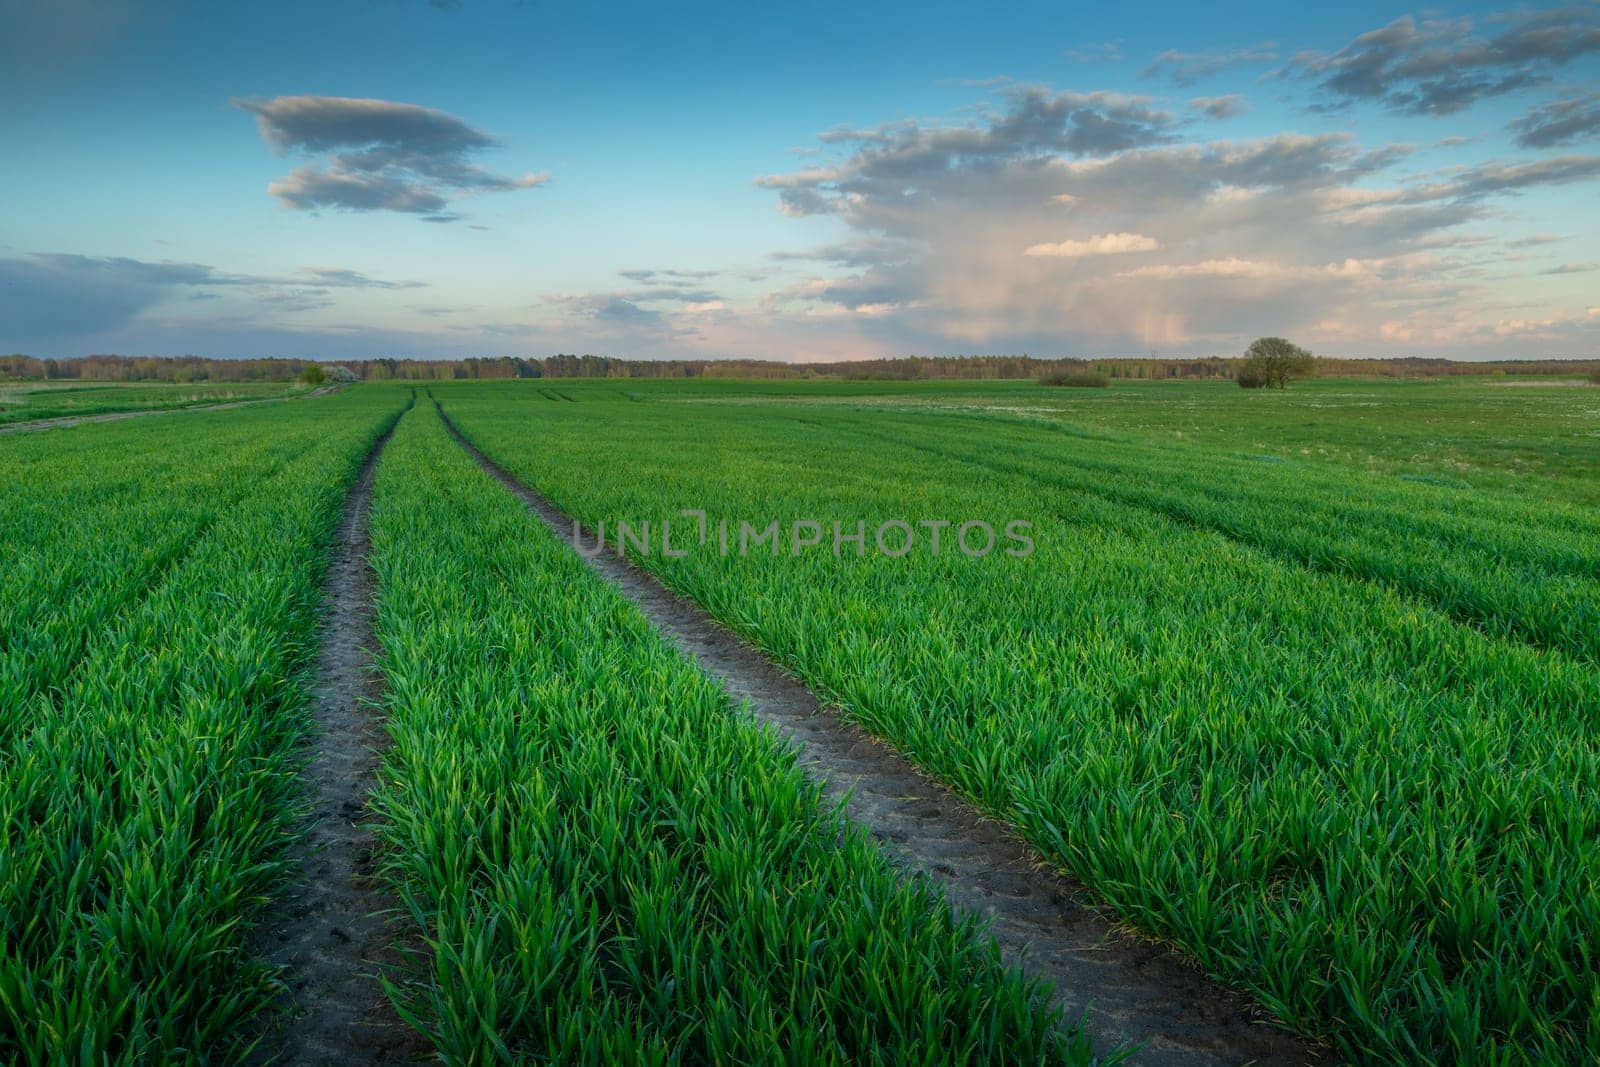 Technological path in fresh green field, evening view by darekb22